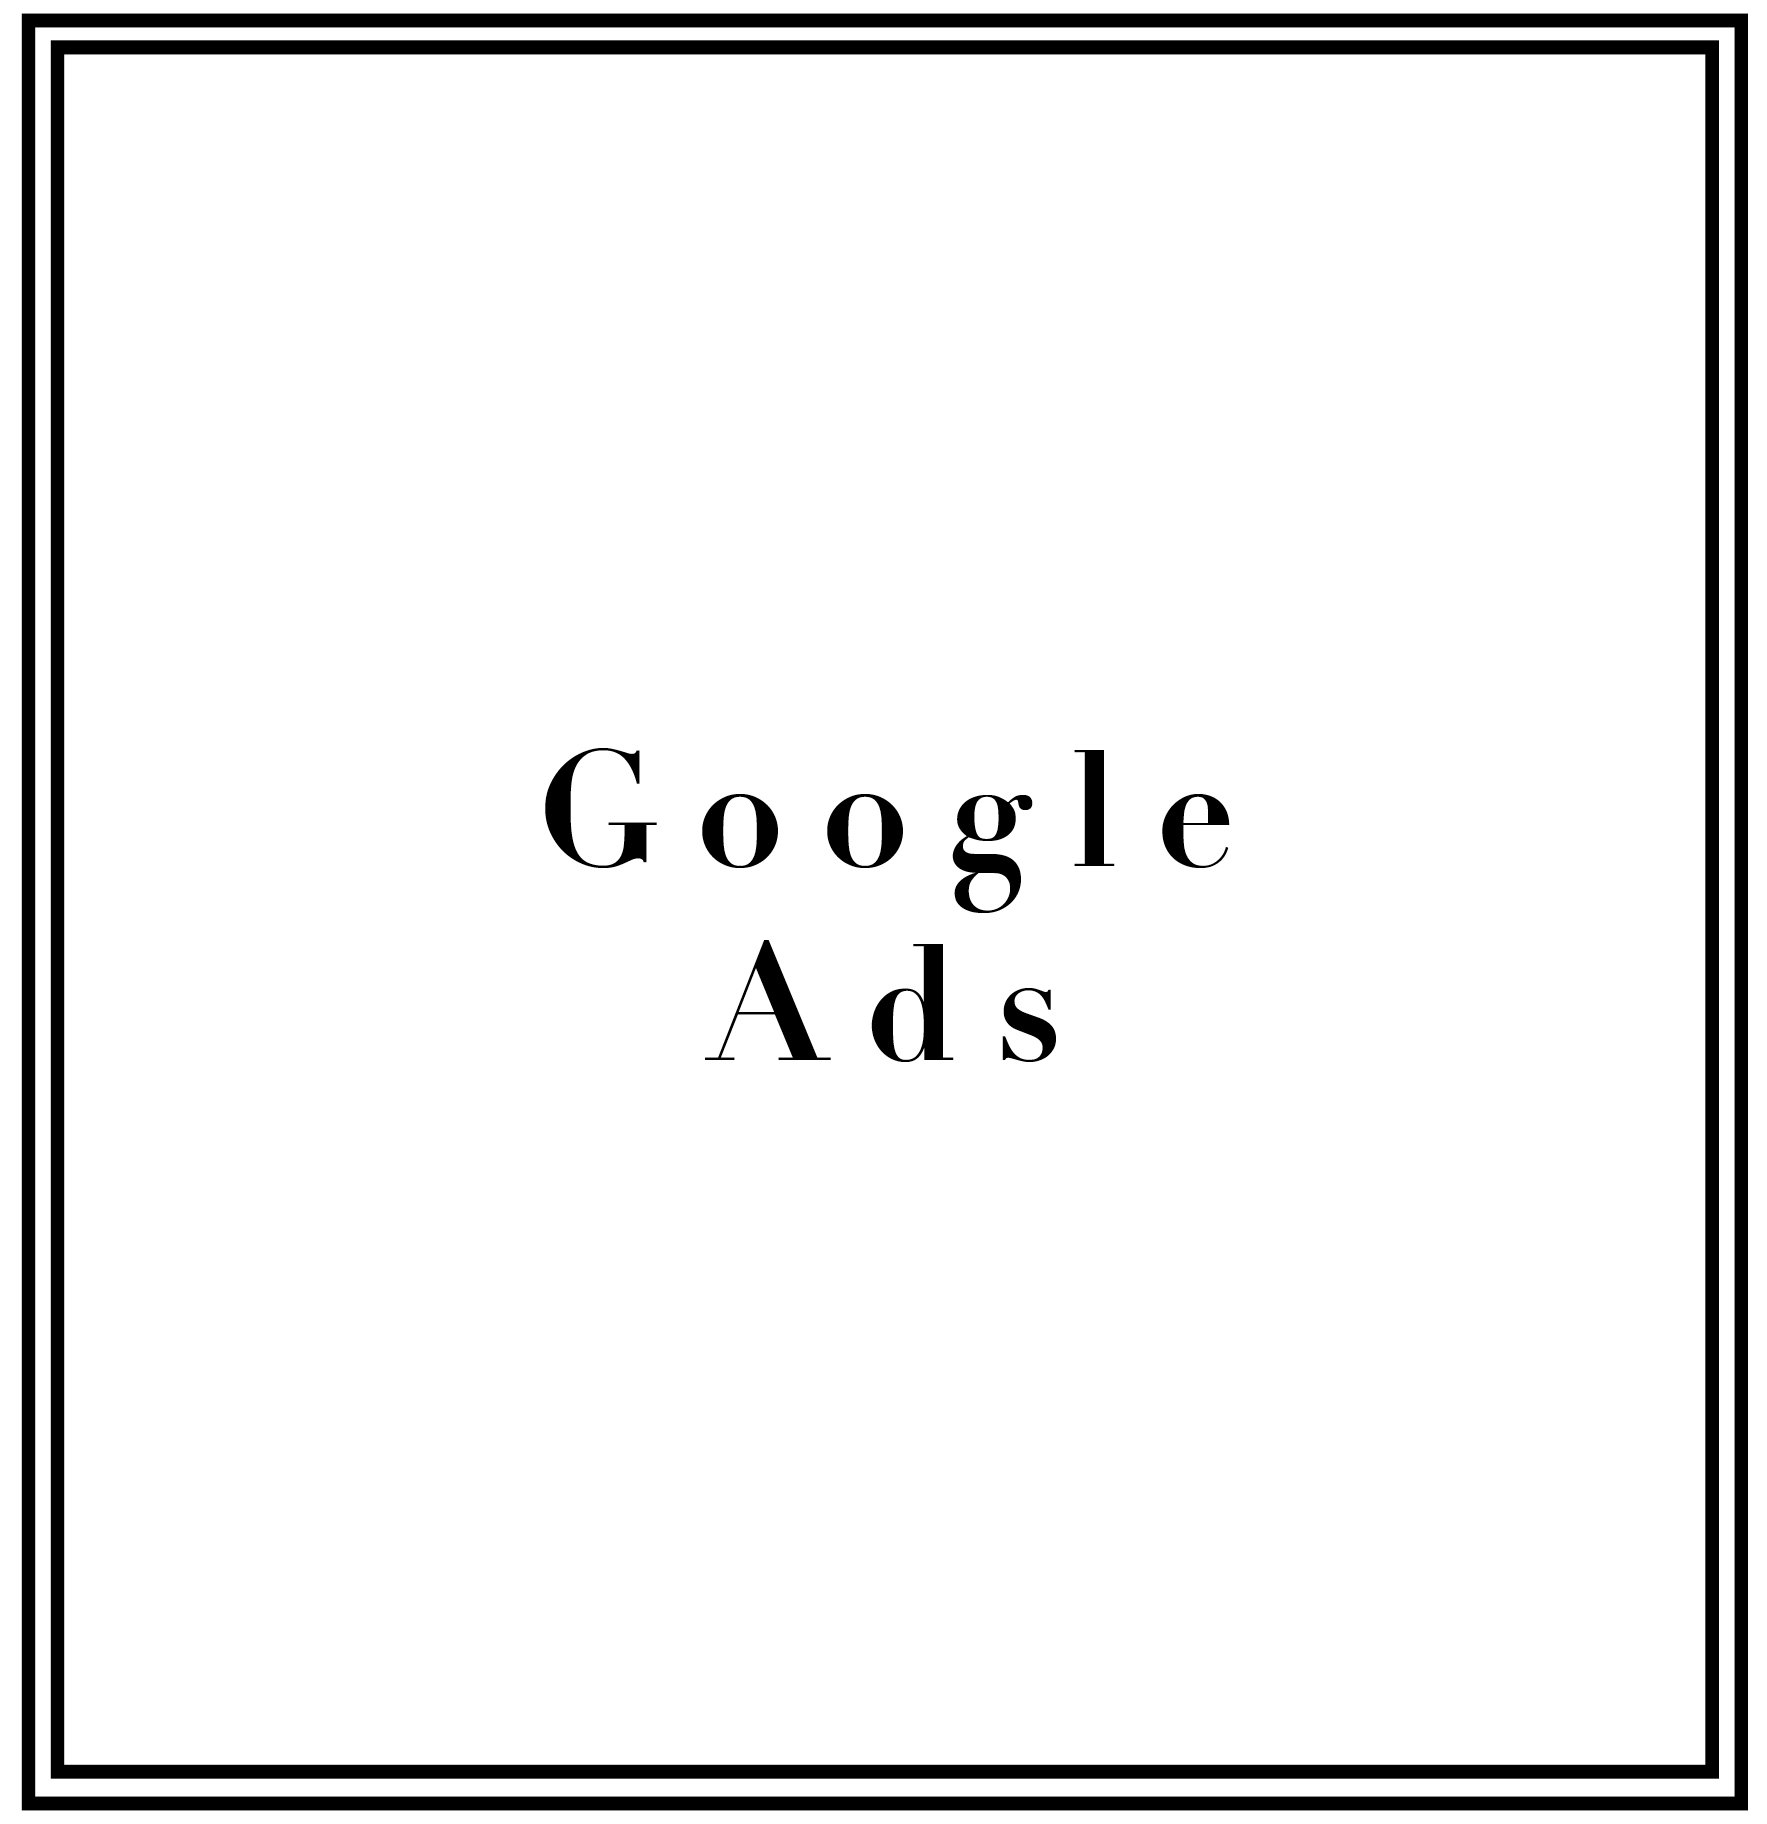 IVDMA_Google Ads_White.jpg